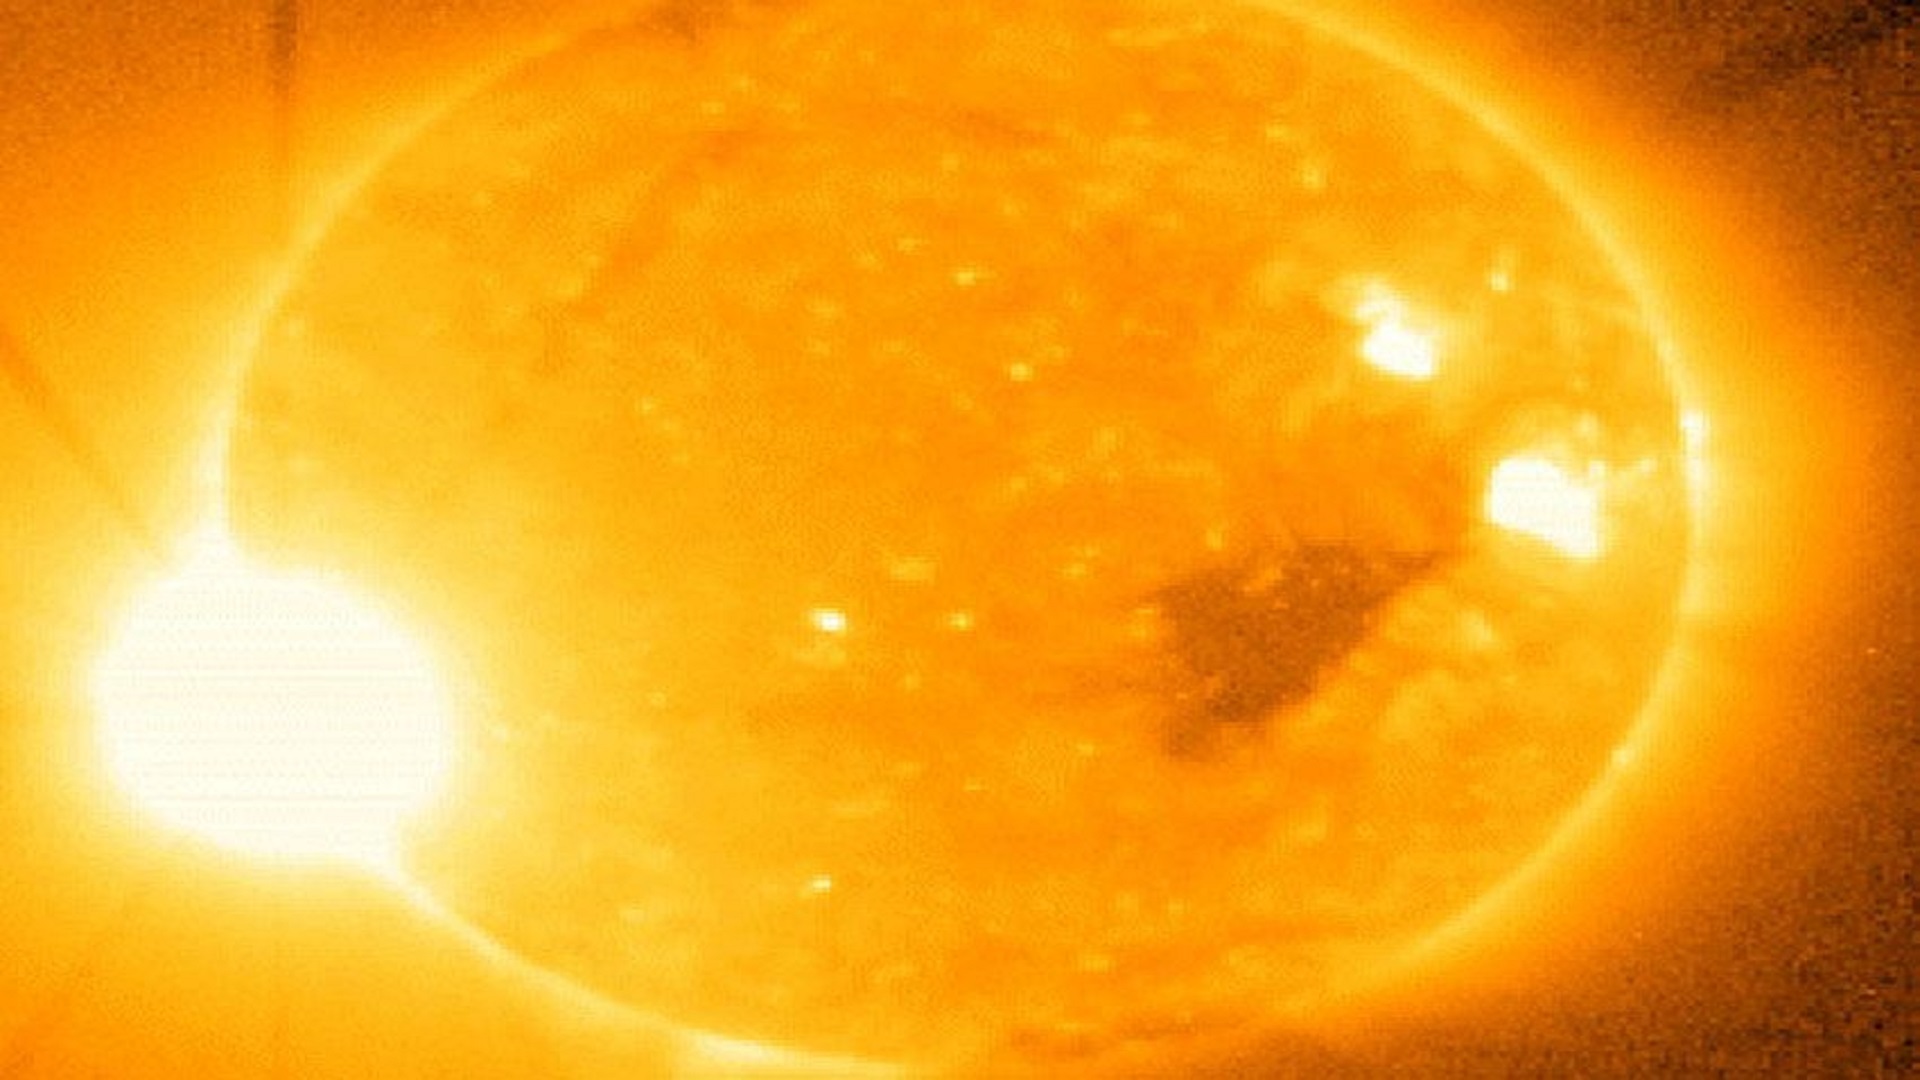 Badai Matahari Diprediksi Akan Menghantam Bumi 14 April 2022, Apa Dampaknya?